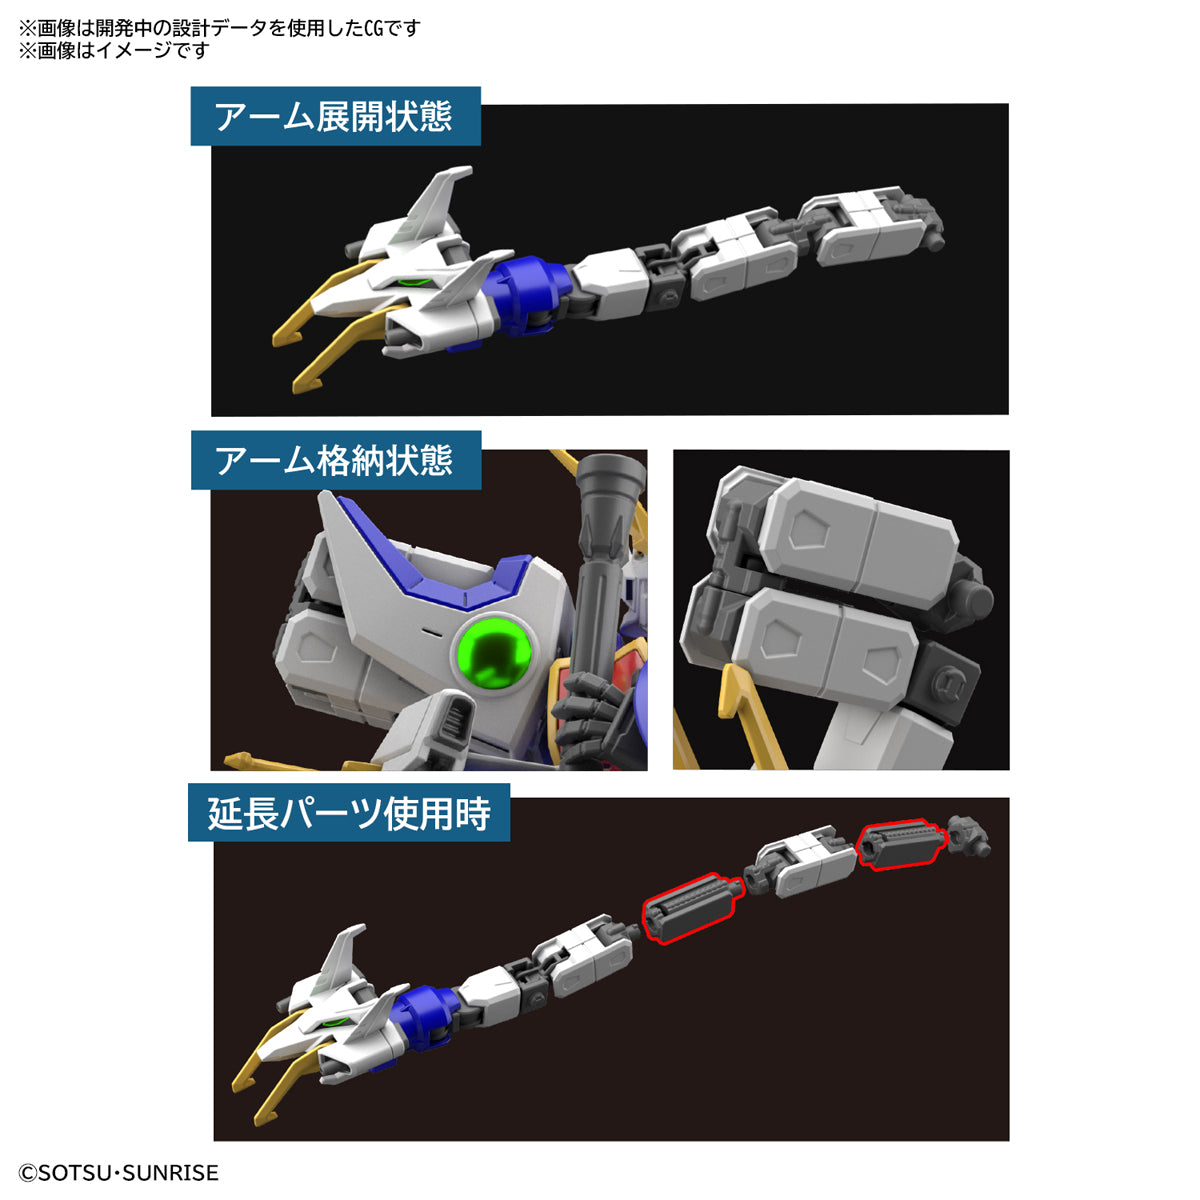 HG Shenlong Gundam 1/144